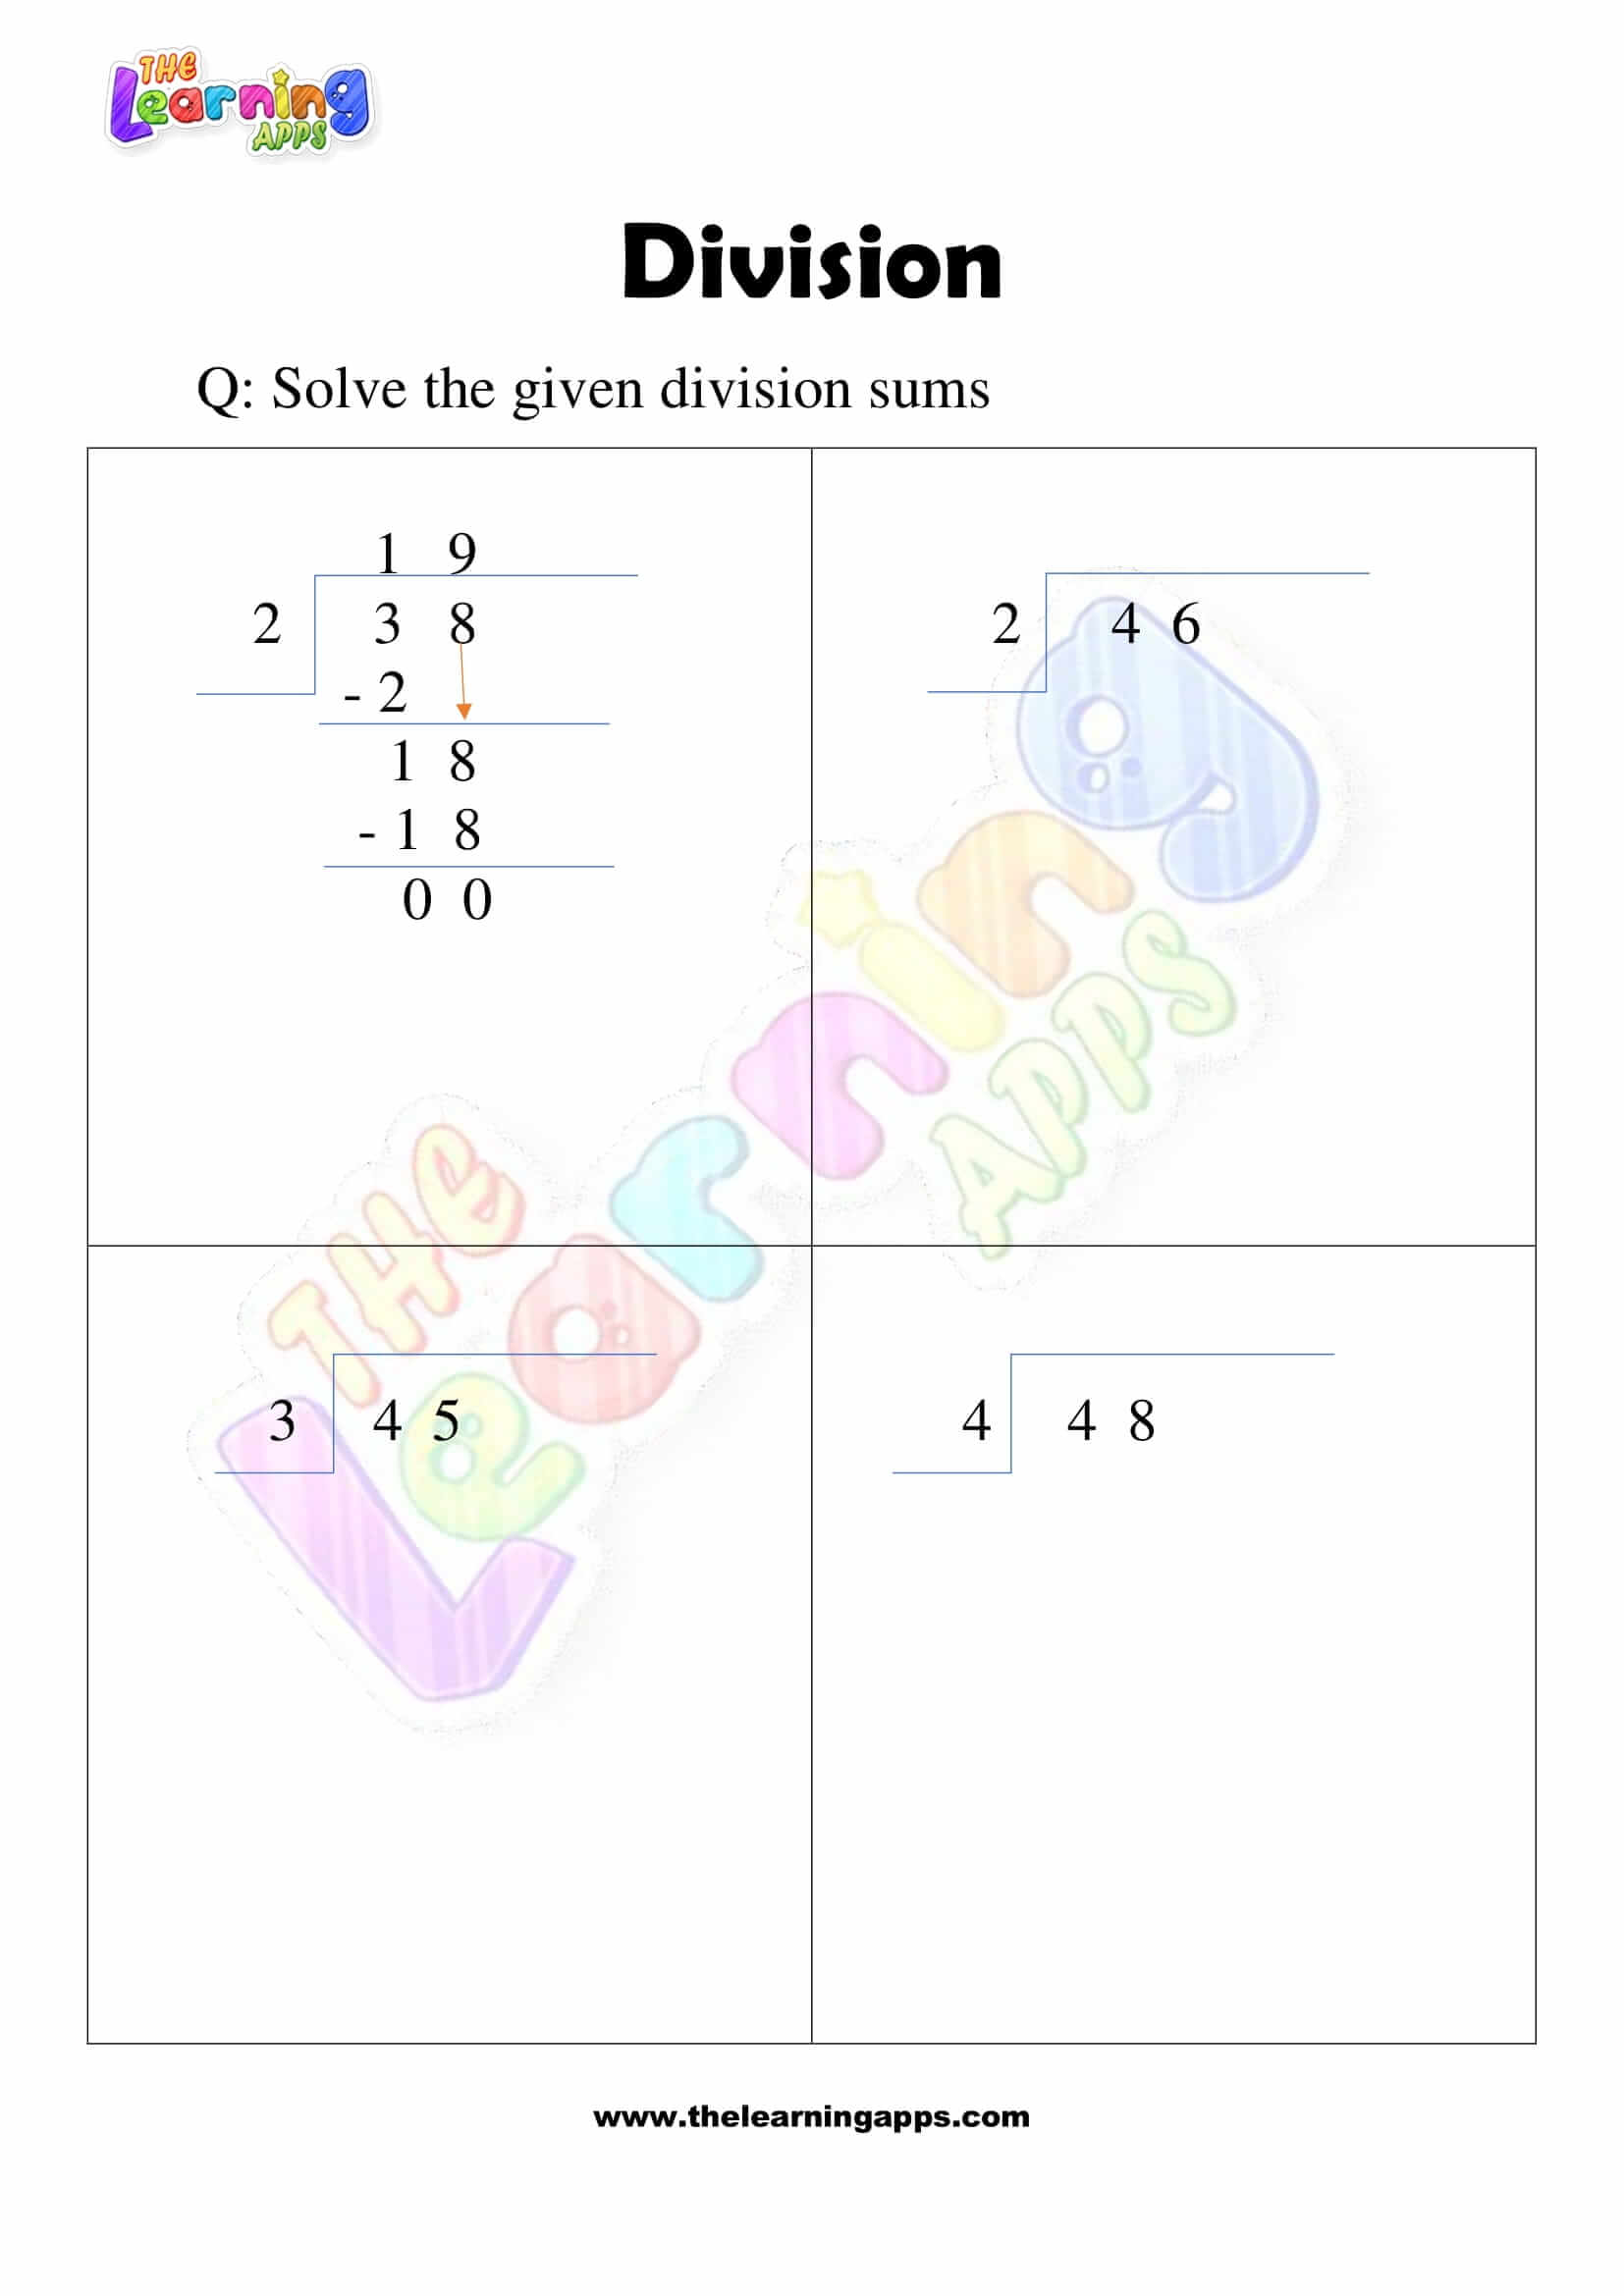 Division Worksheet - Grade 3 - Activity 1